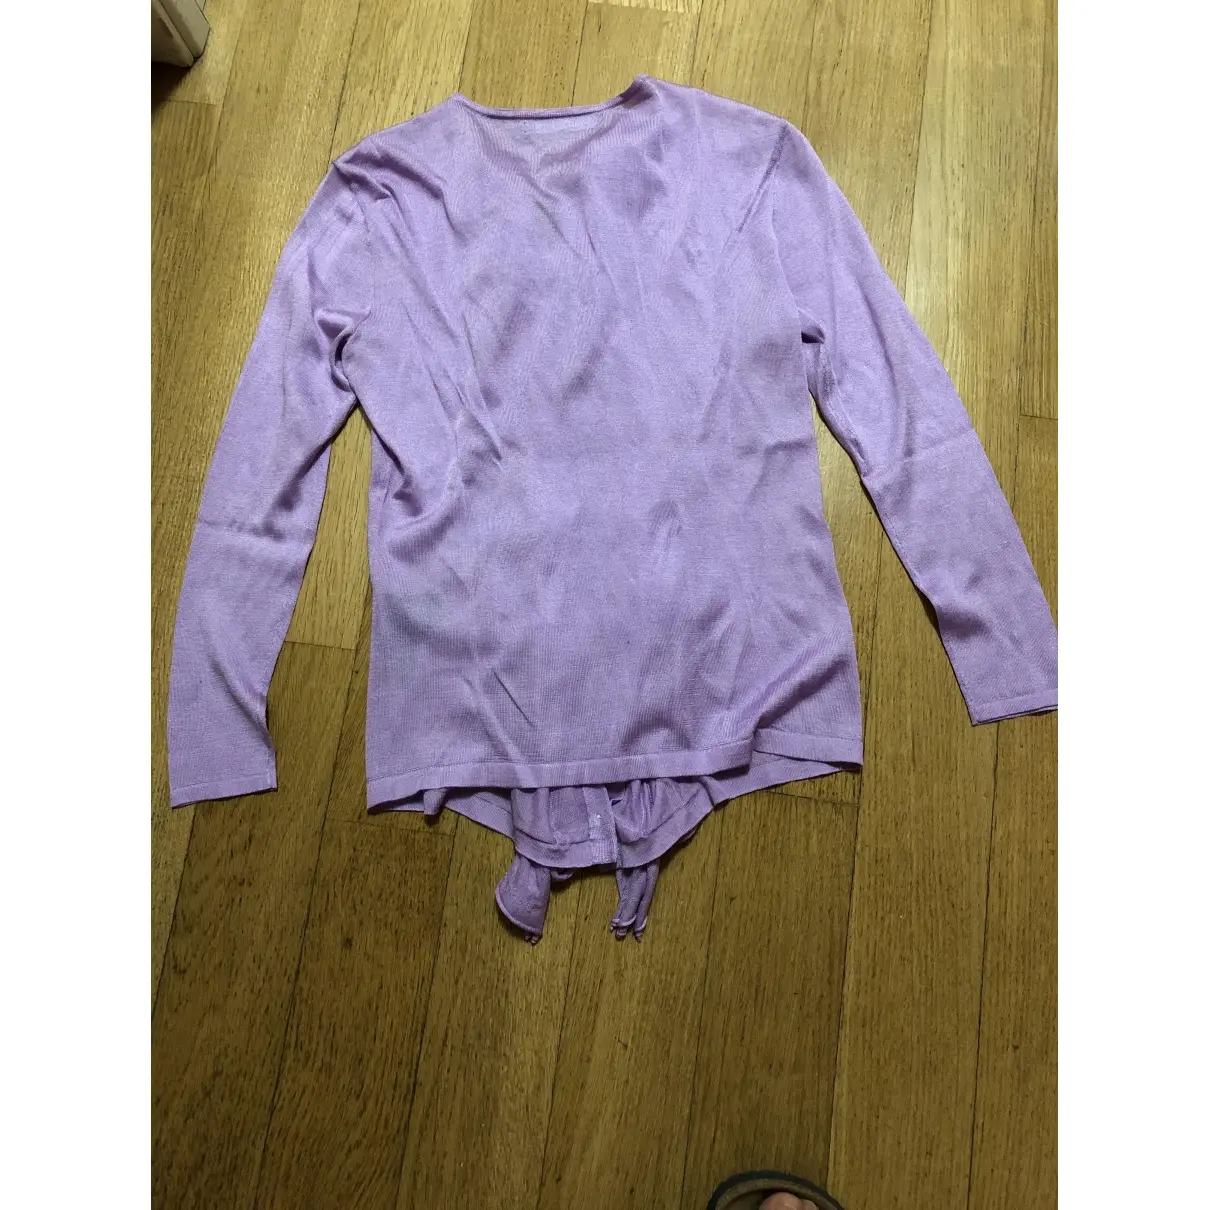 Ralph Lauren Silk blouse for sale